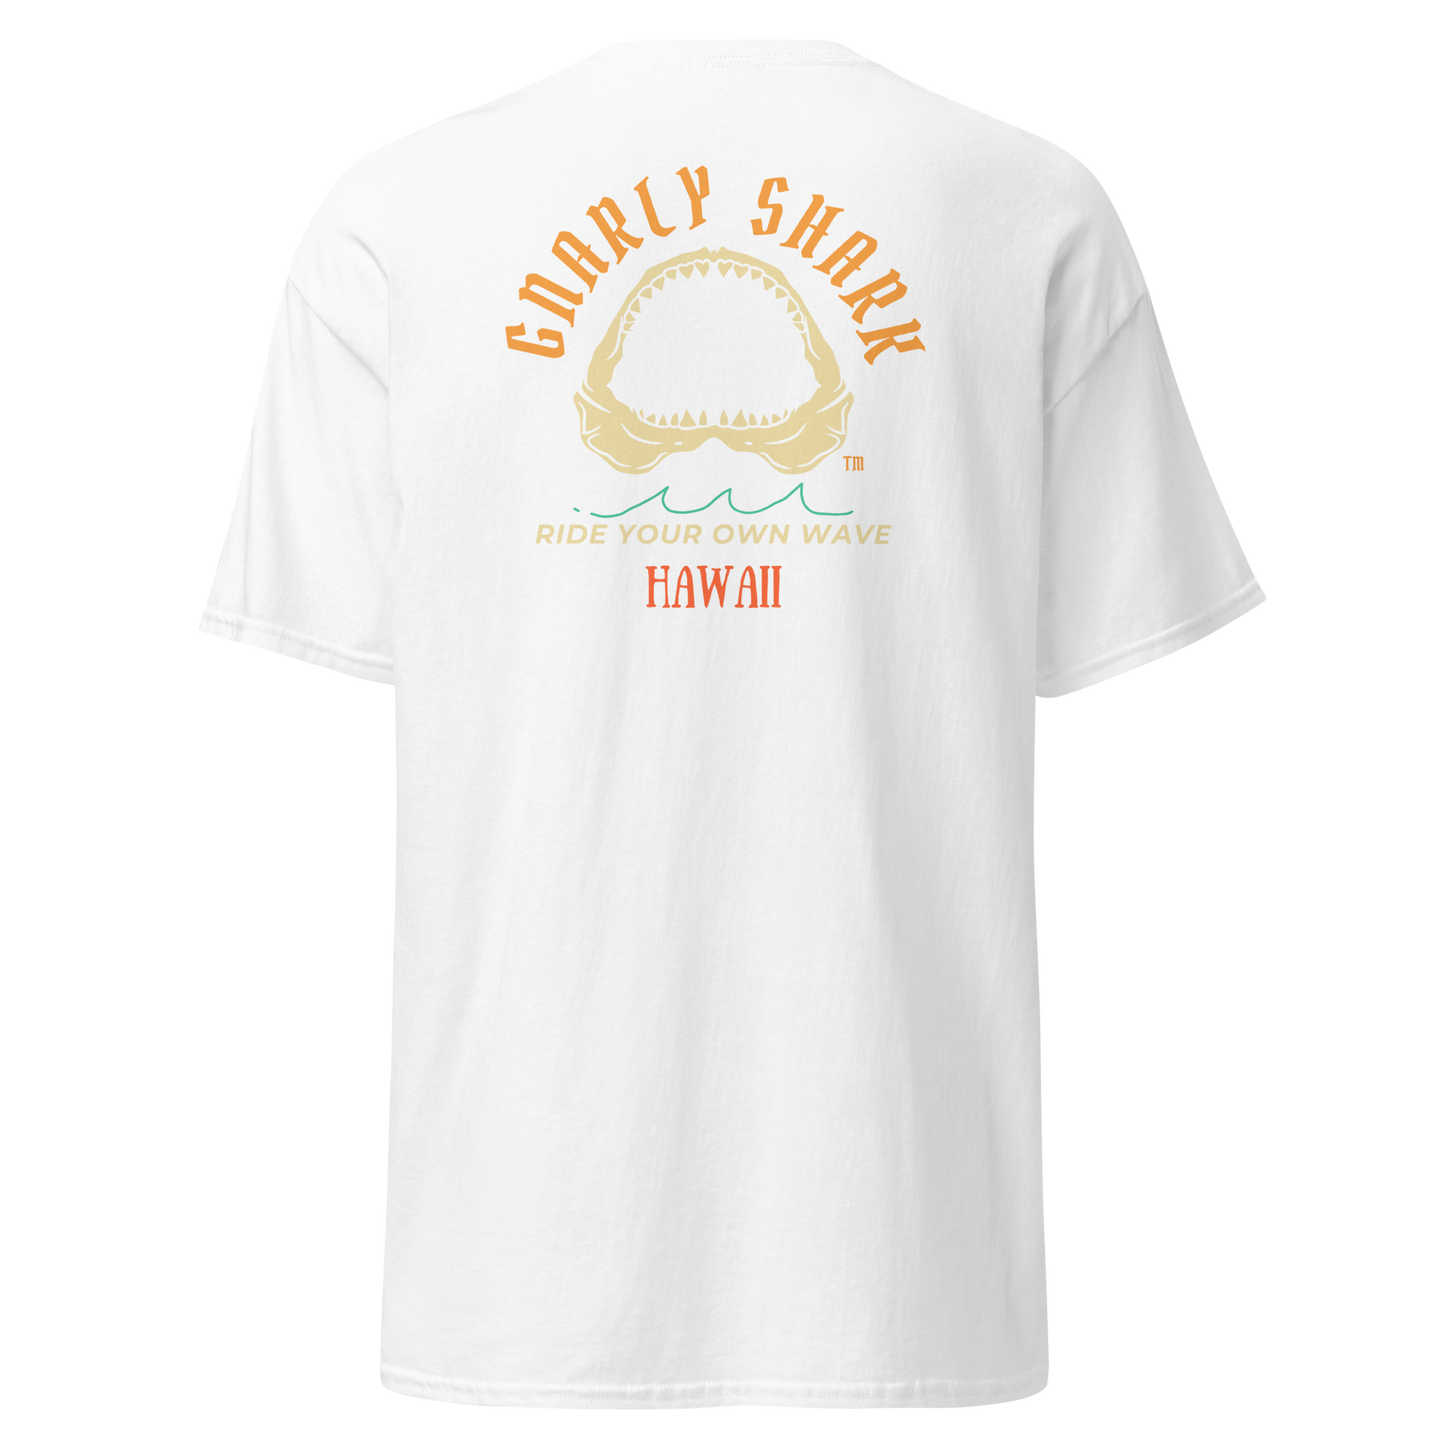 Gnarly Shark Hawaii T-Shirt - Front / Back - Gildan classic 5000